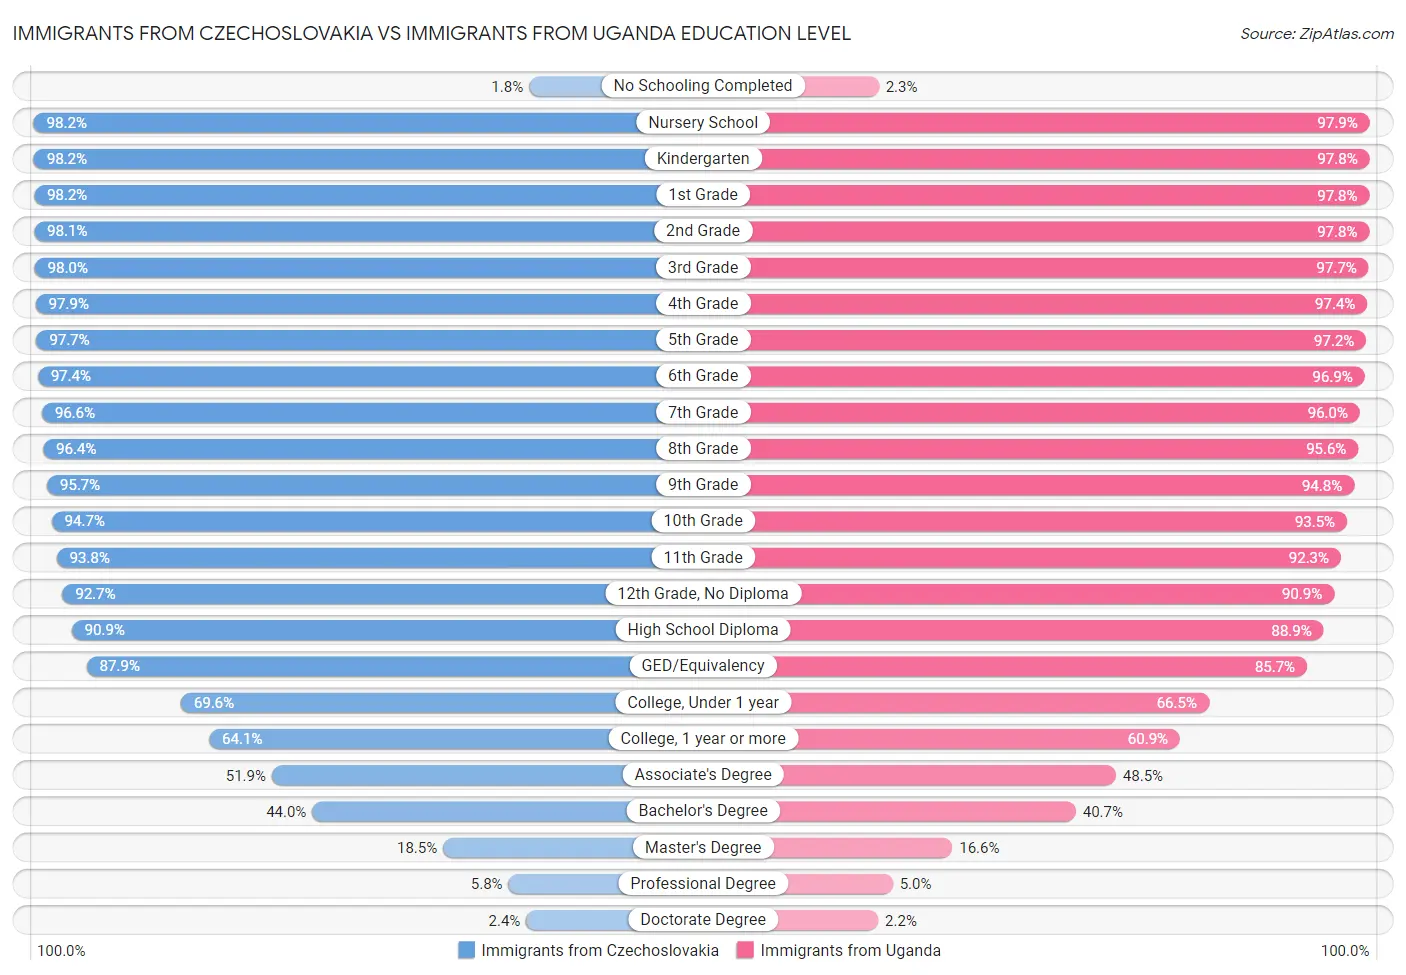 Immigrants from Czechoslovakia vs Immigrants from Uganda Education Level